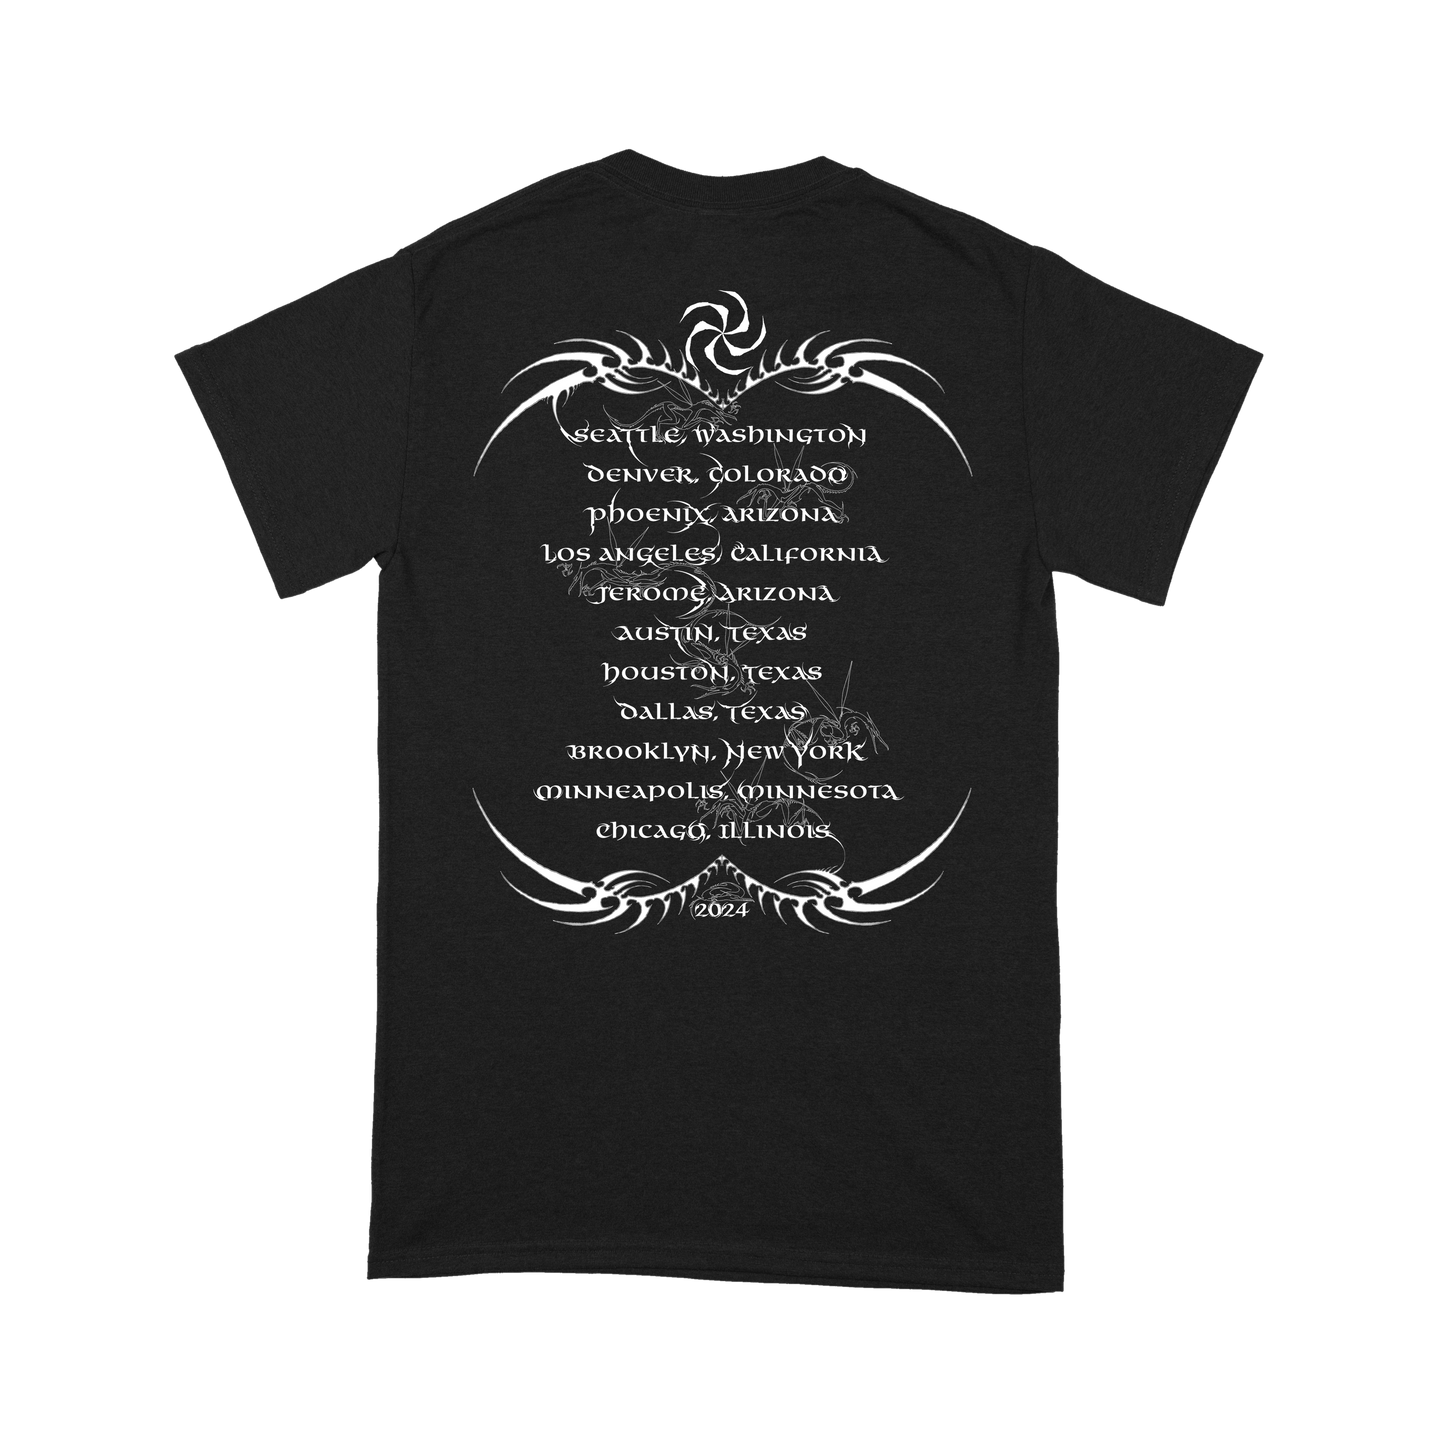 Zheani - Goddess Tour T-Shirt